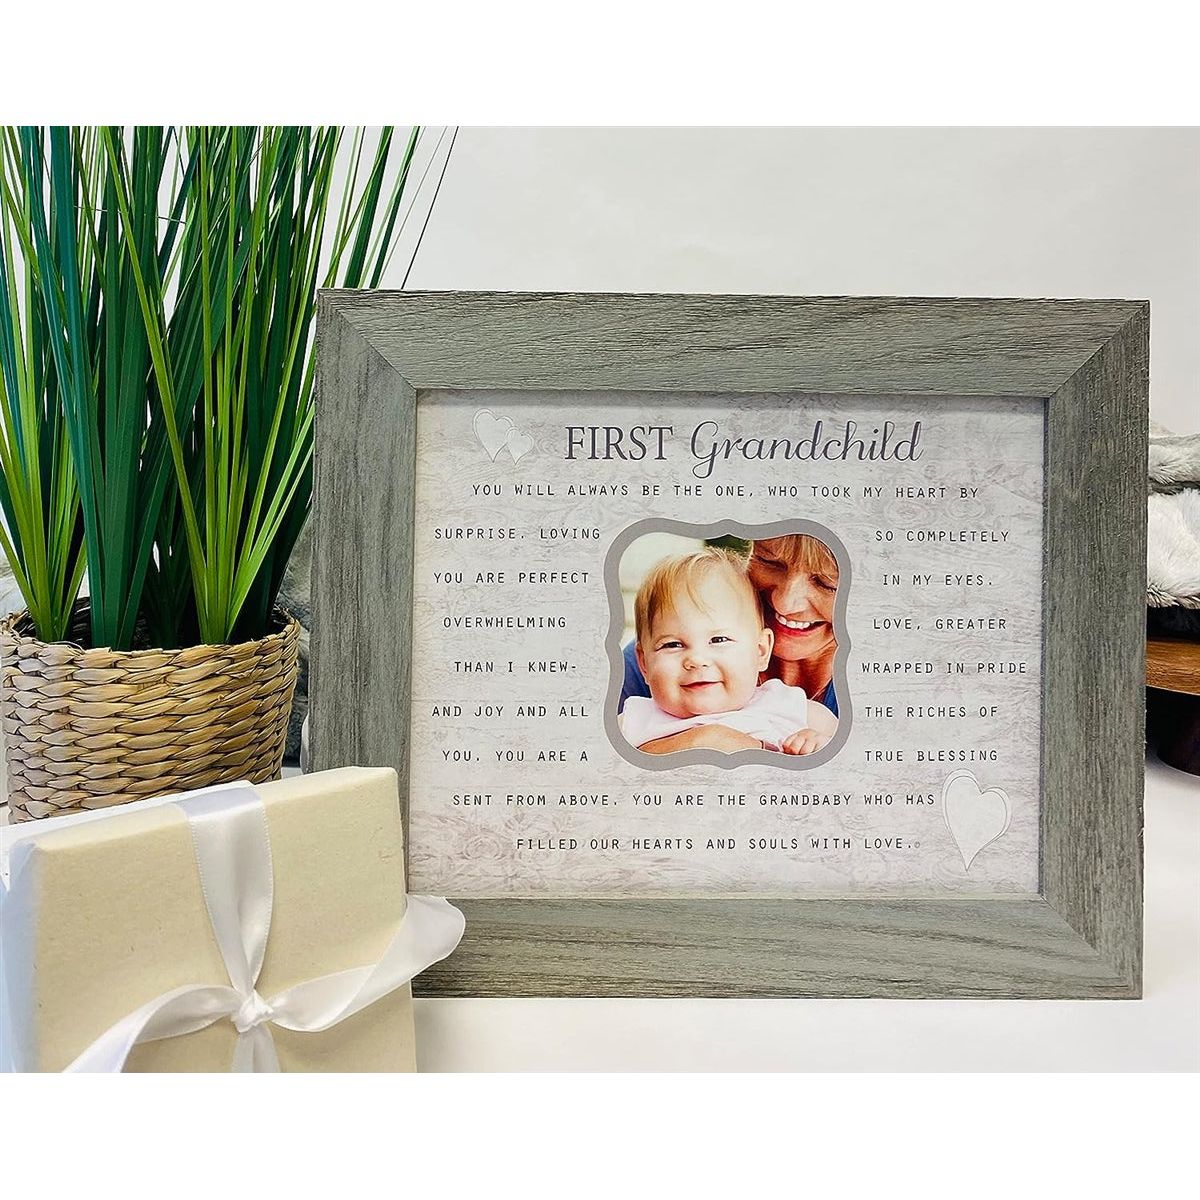 First Grandchild: 8x10 Frame for New Grandparents